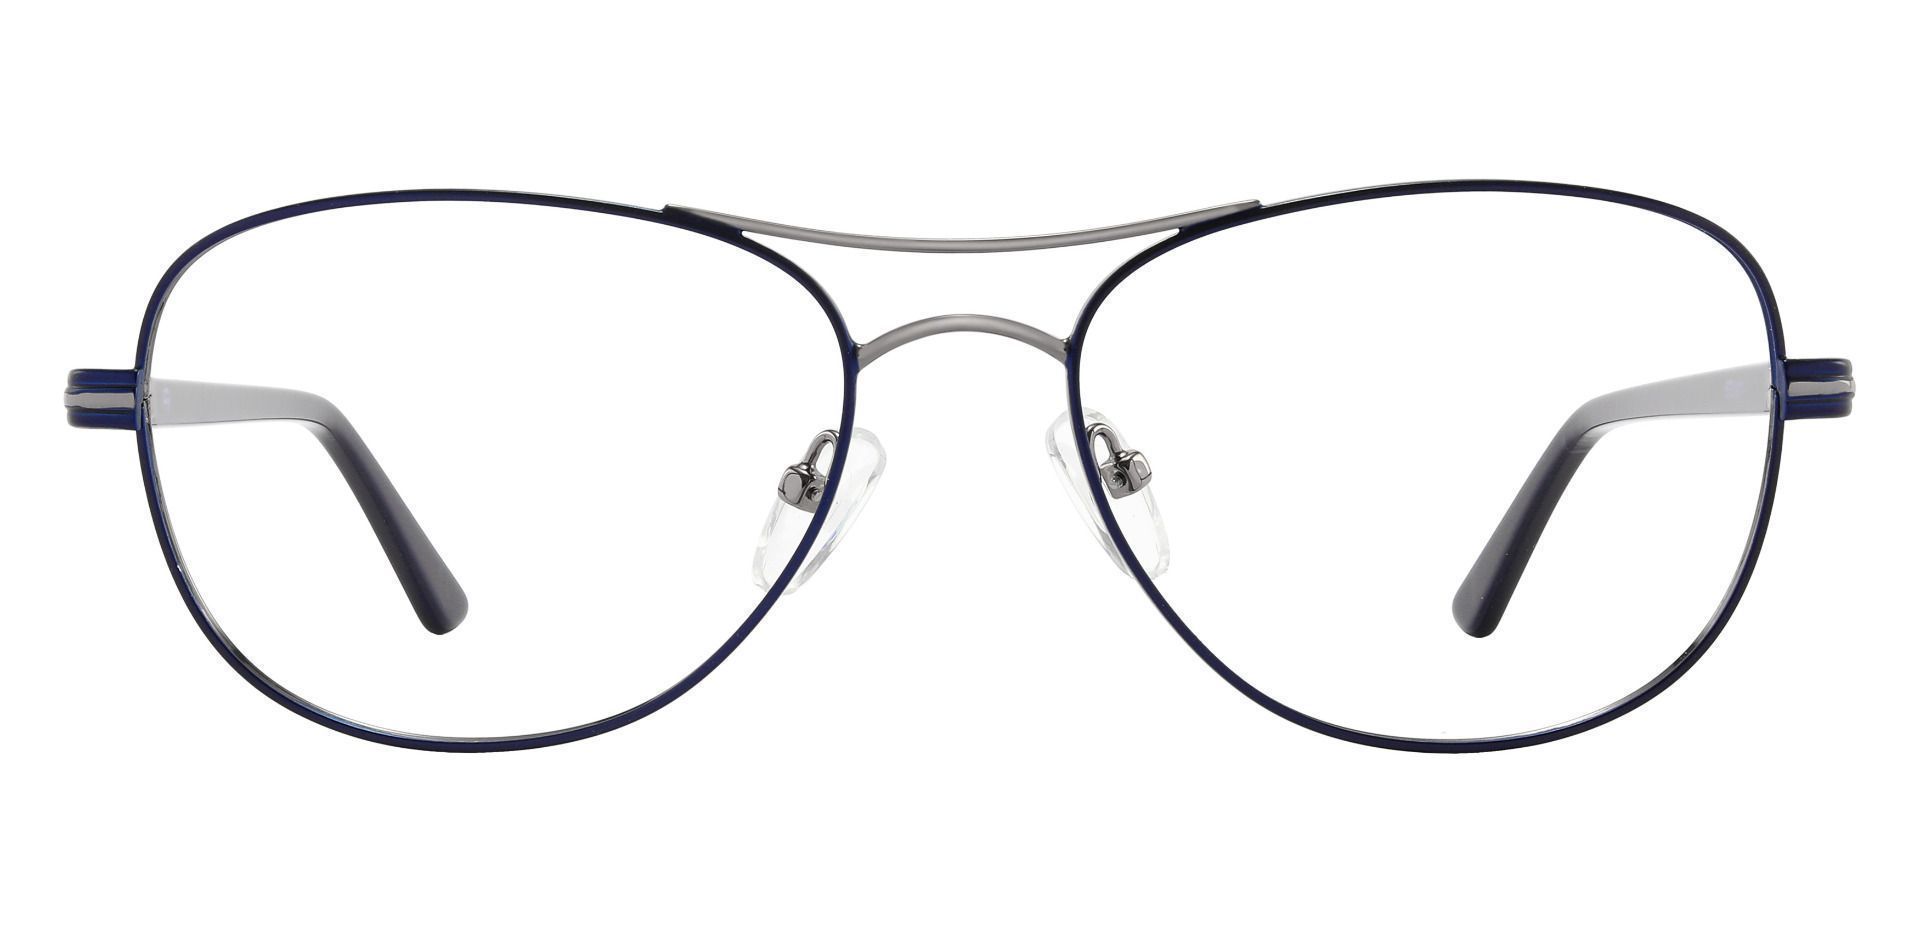 Reeves Aviator Eyeglasses Frame - Blue